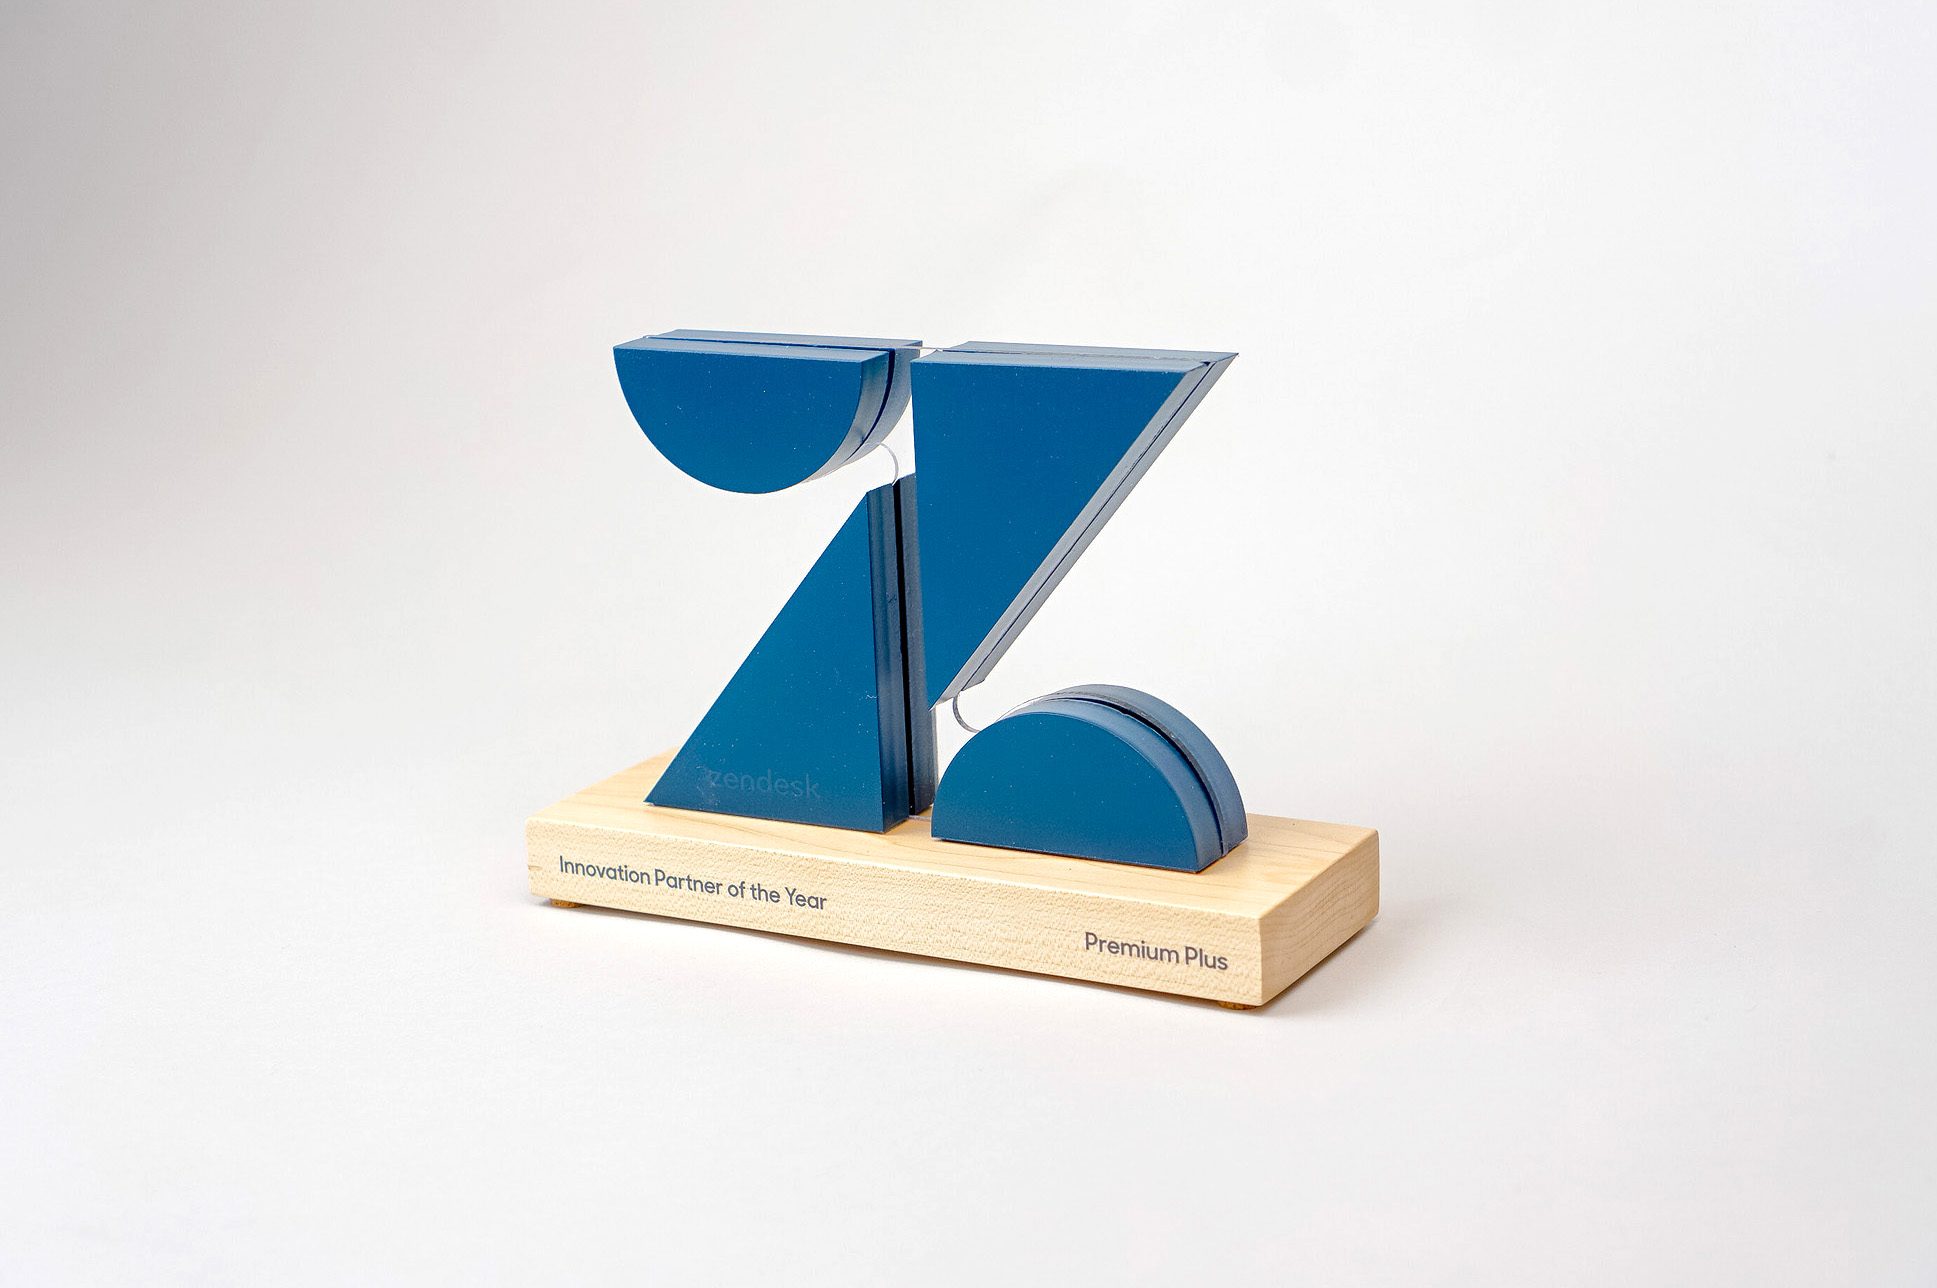 Custom cut, logo shaped partner award with optical illusion for Zendesk, a customer service software company headquartered in San Francisco, California.